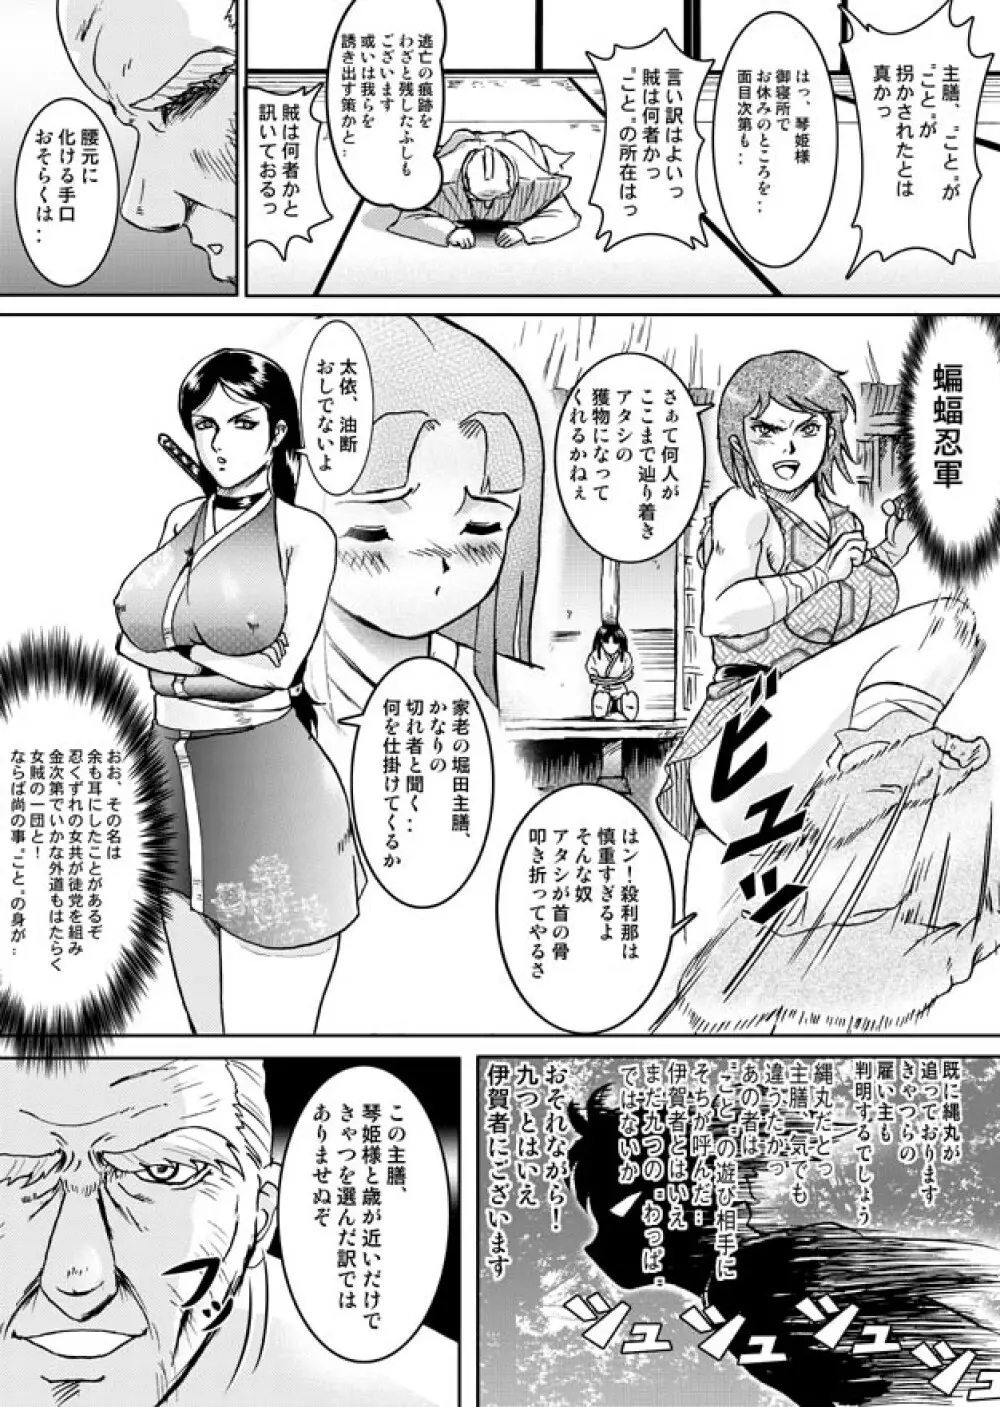 Same-themed manga about kid fighting female ninjas from japanese imageboard. 2ページ